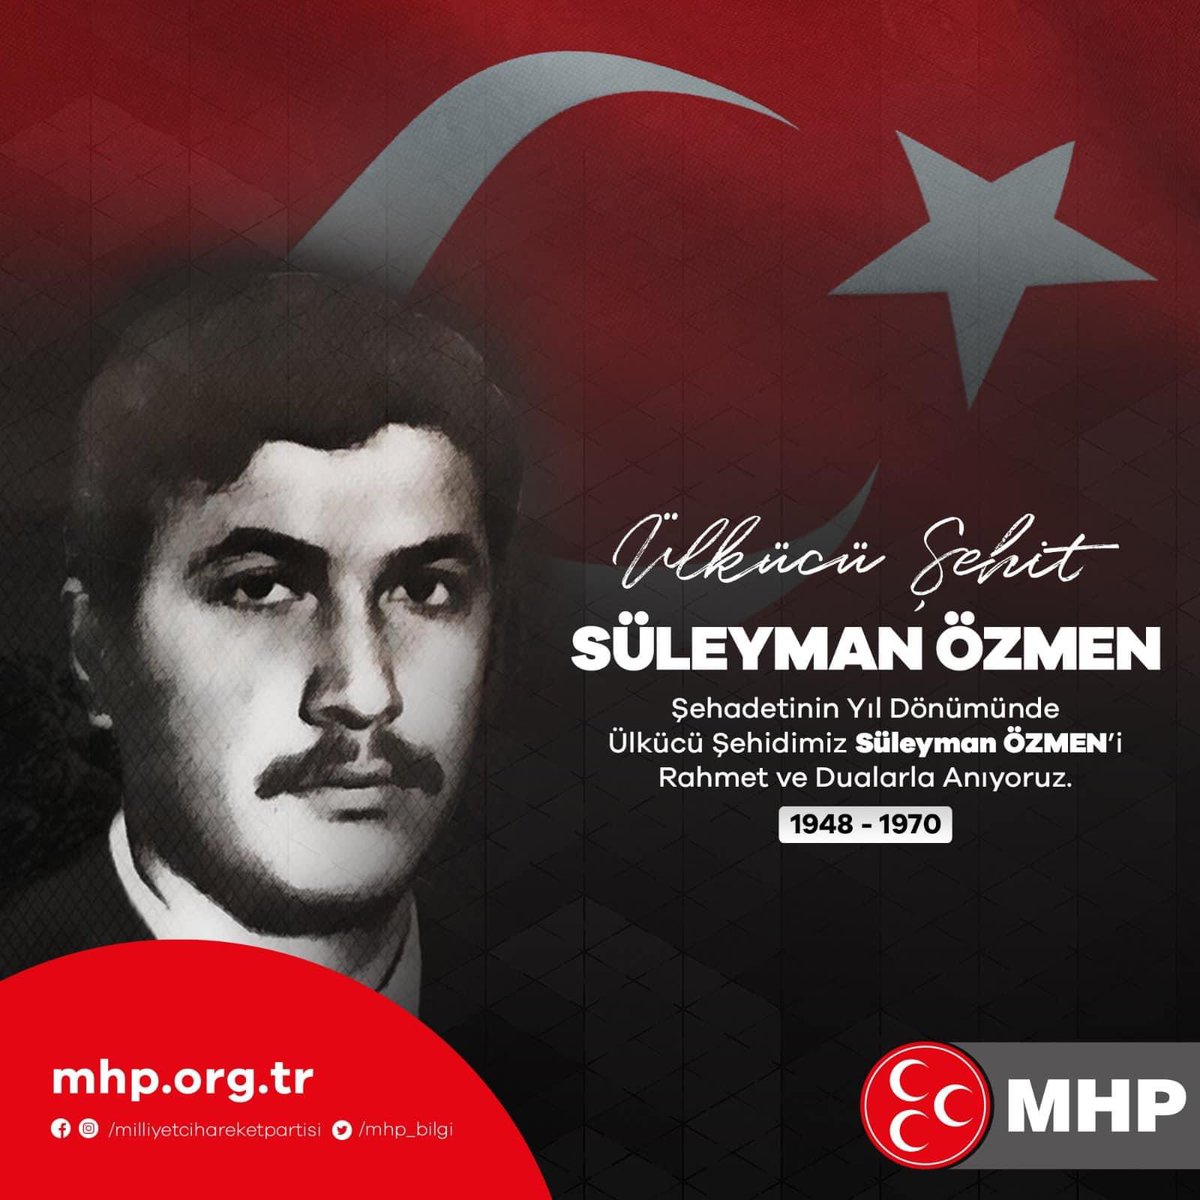 Bozkurt Süleyman ölmedi. 

#SüleymanÖzmen